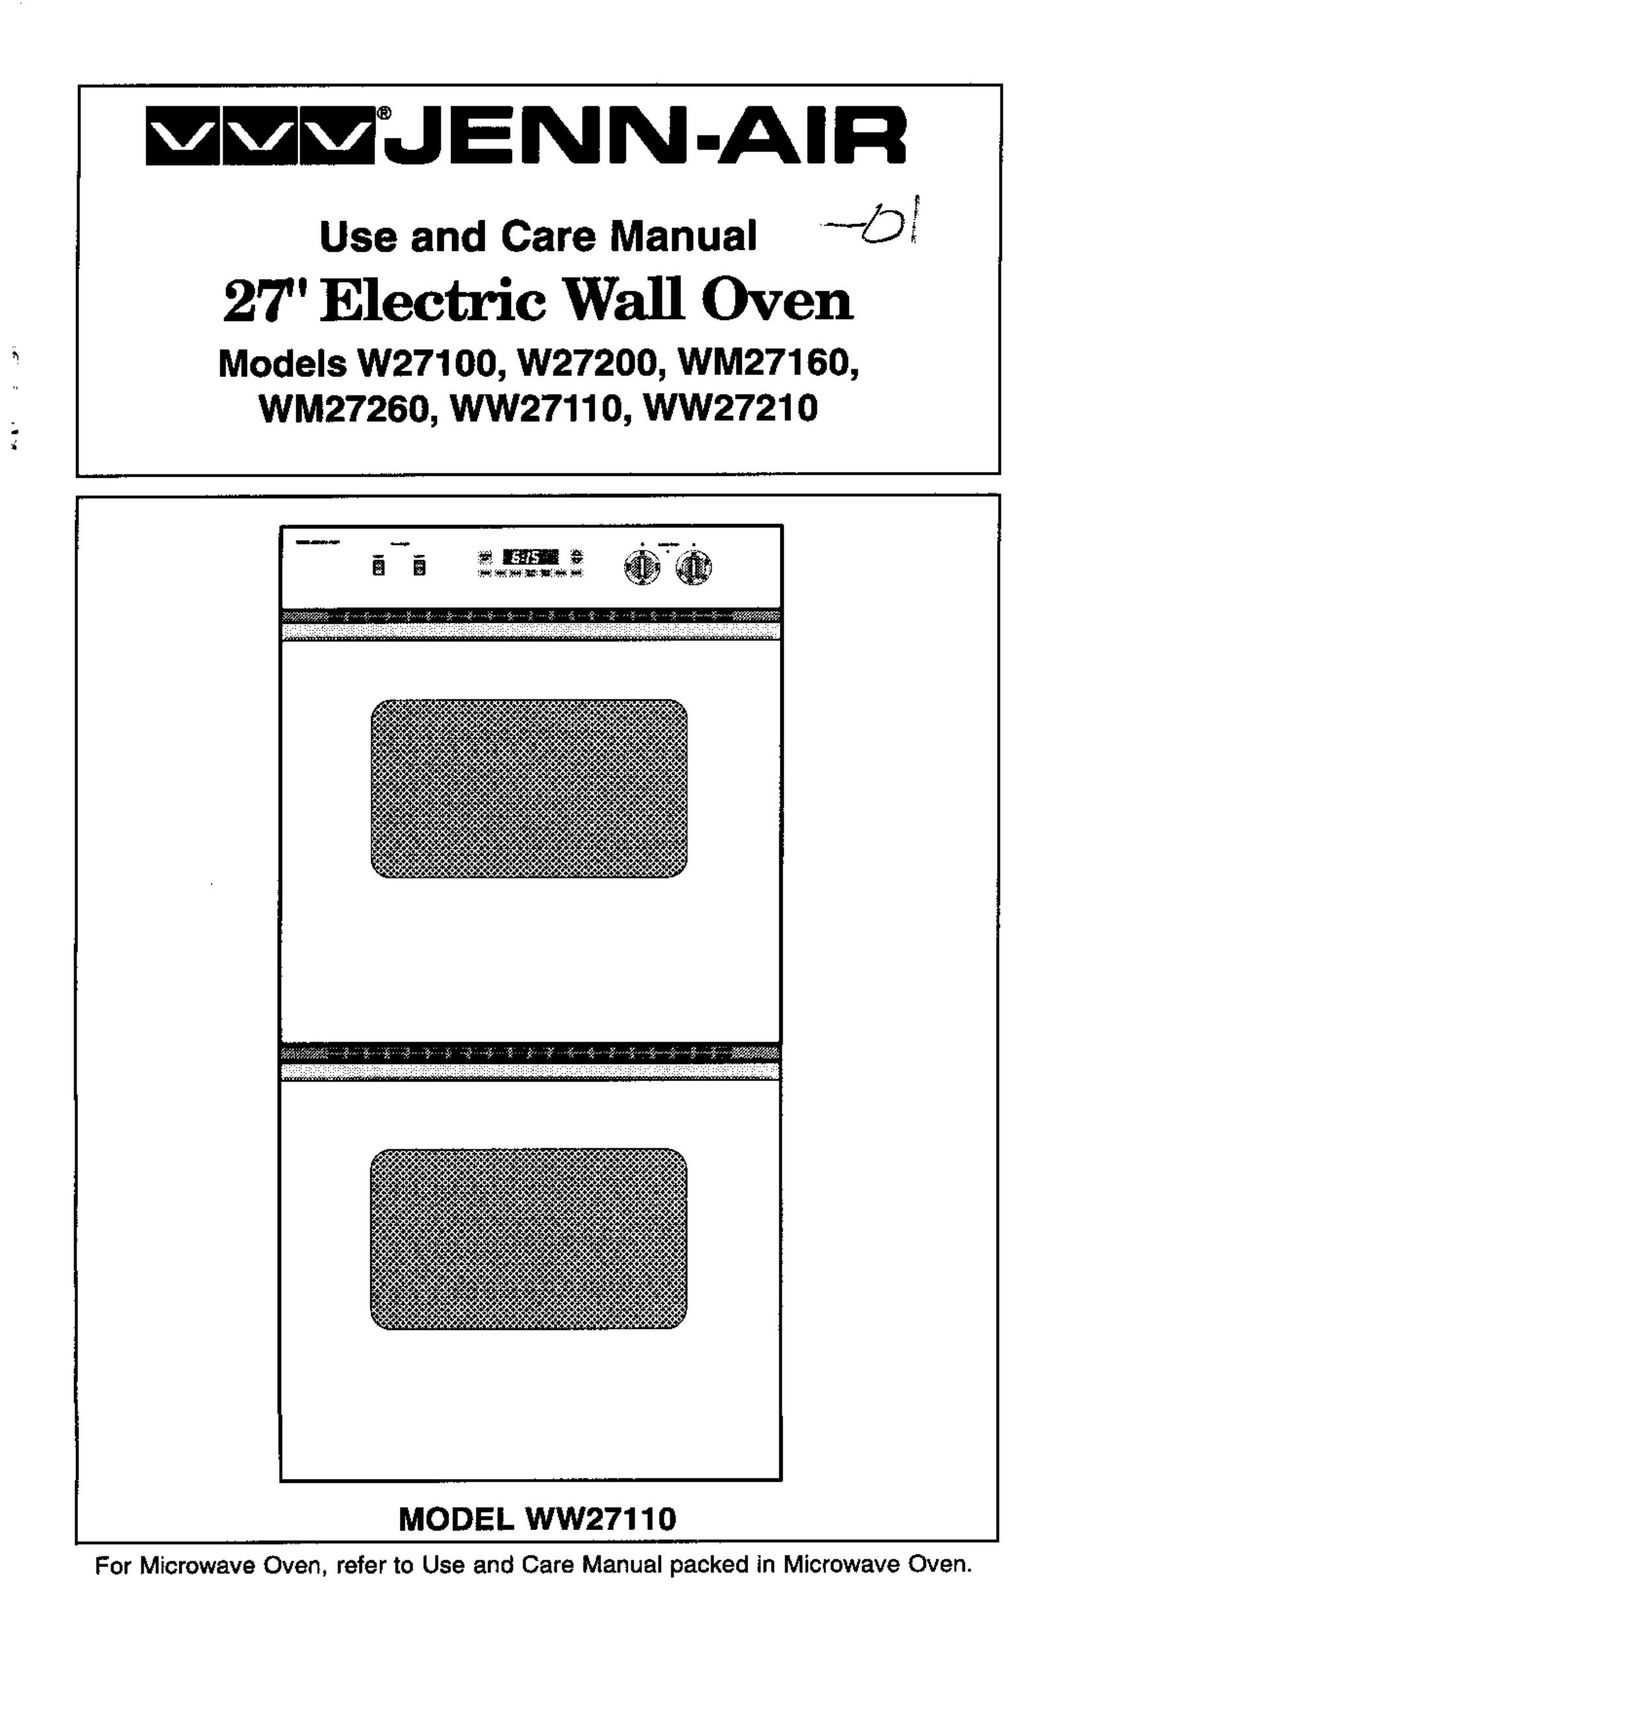 Jenn-Air WM27260 Double Oven User Manual